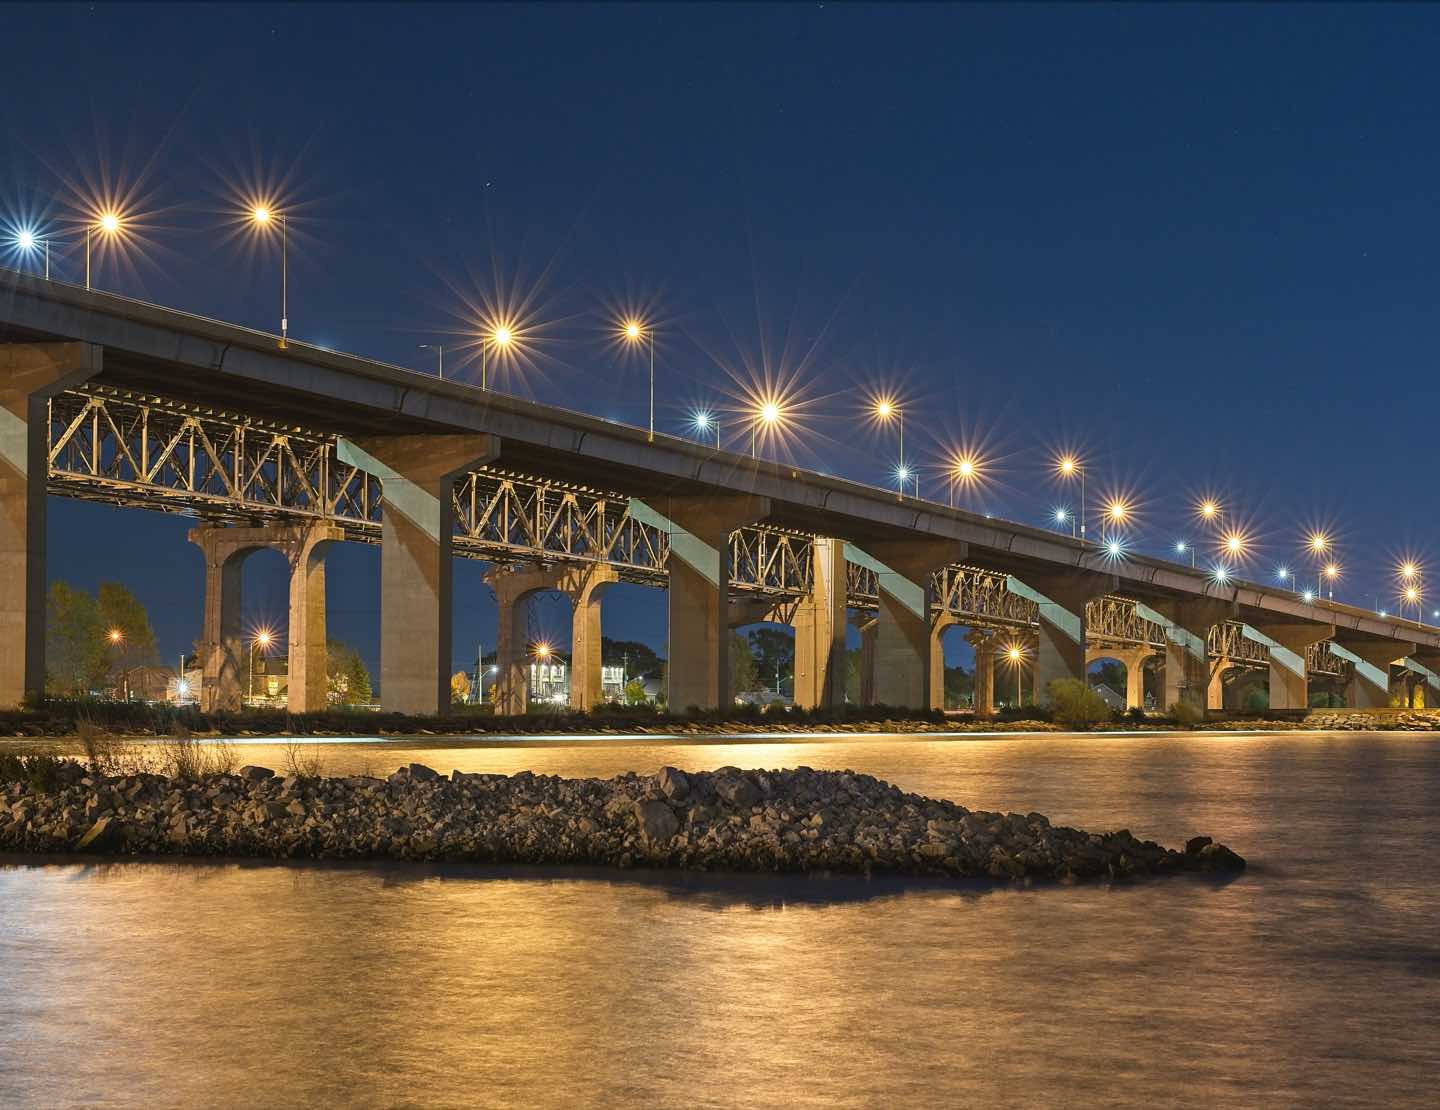 A border bridge between Canada and the US in Niagara Falls, Ontario